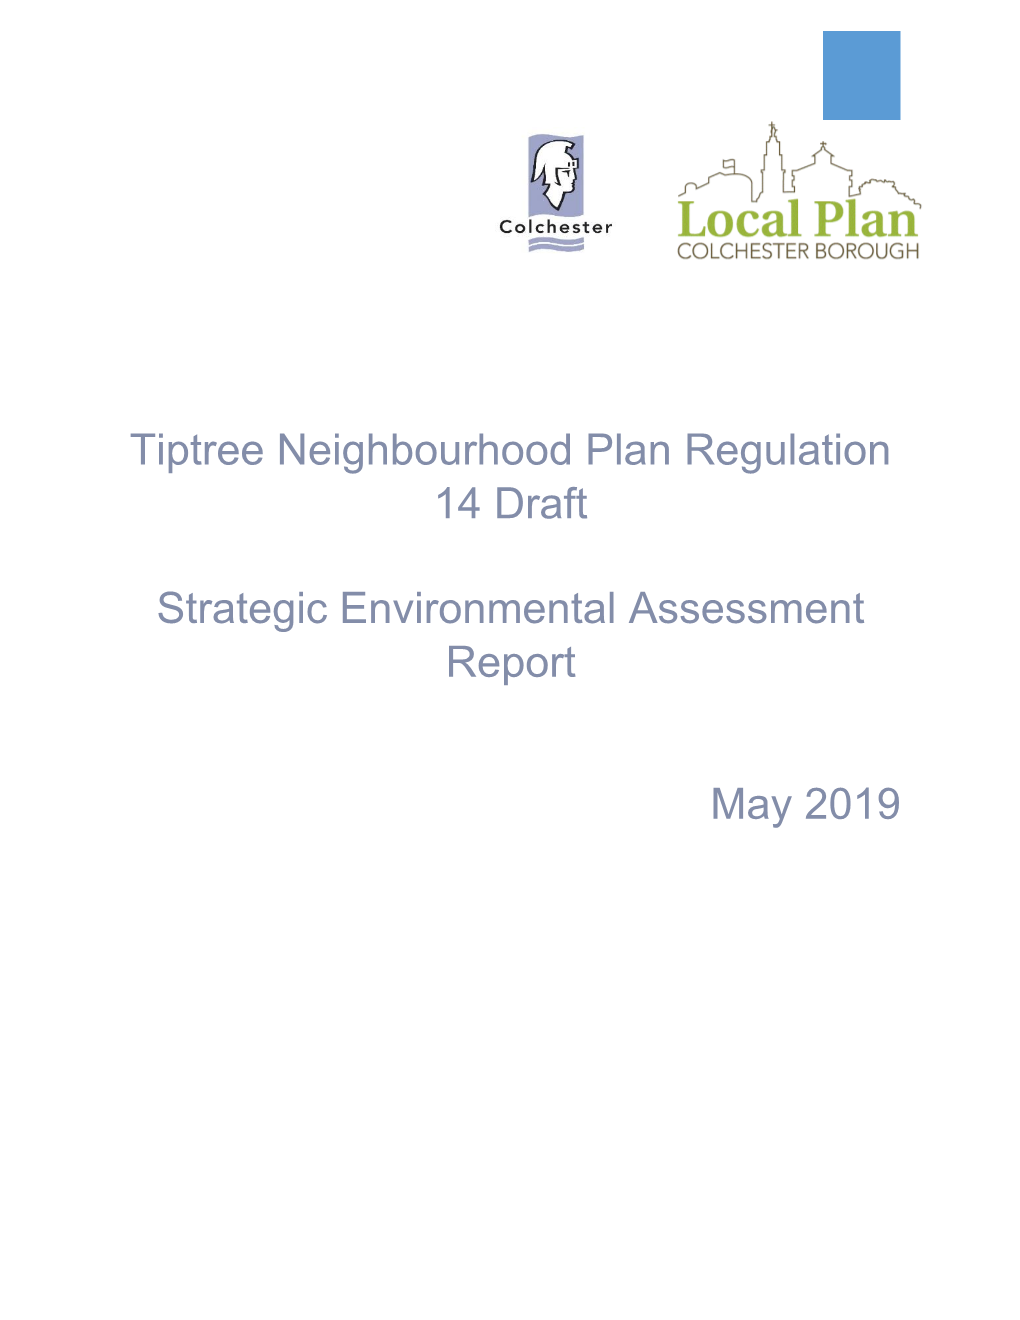 Tiptree Neighbourhood Plan Regulation 14 Draft Strategic